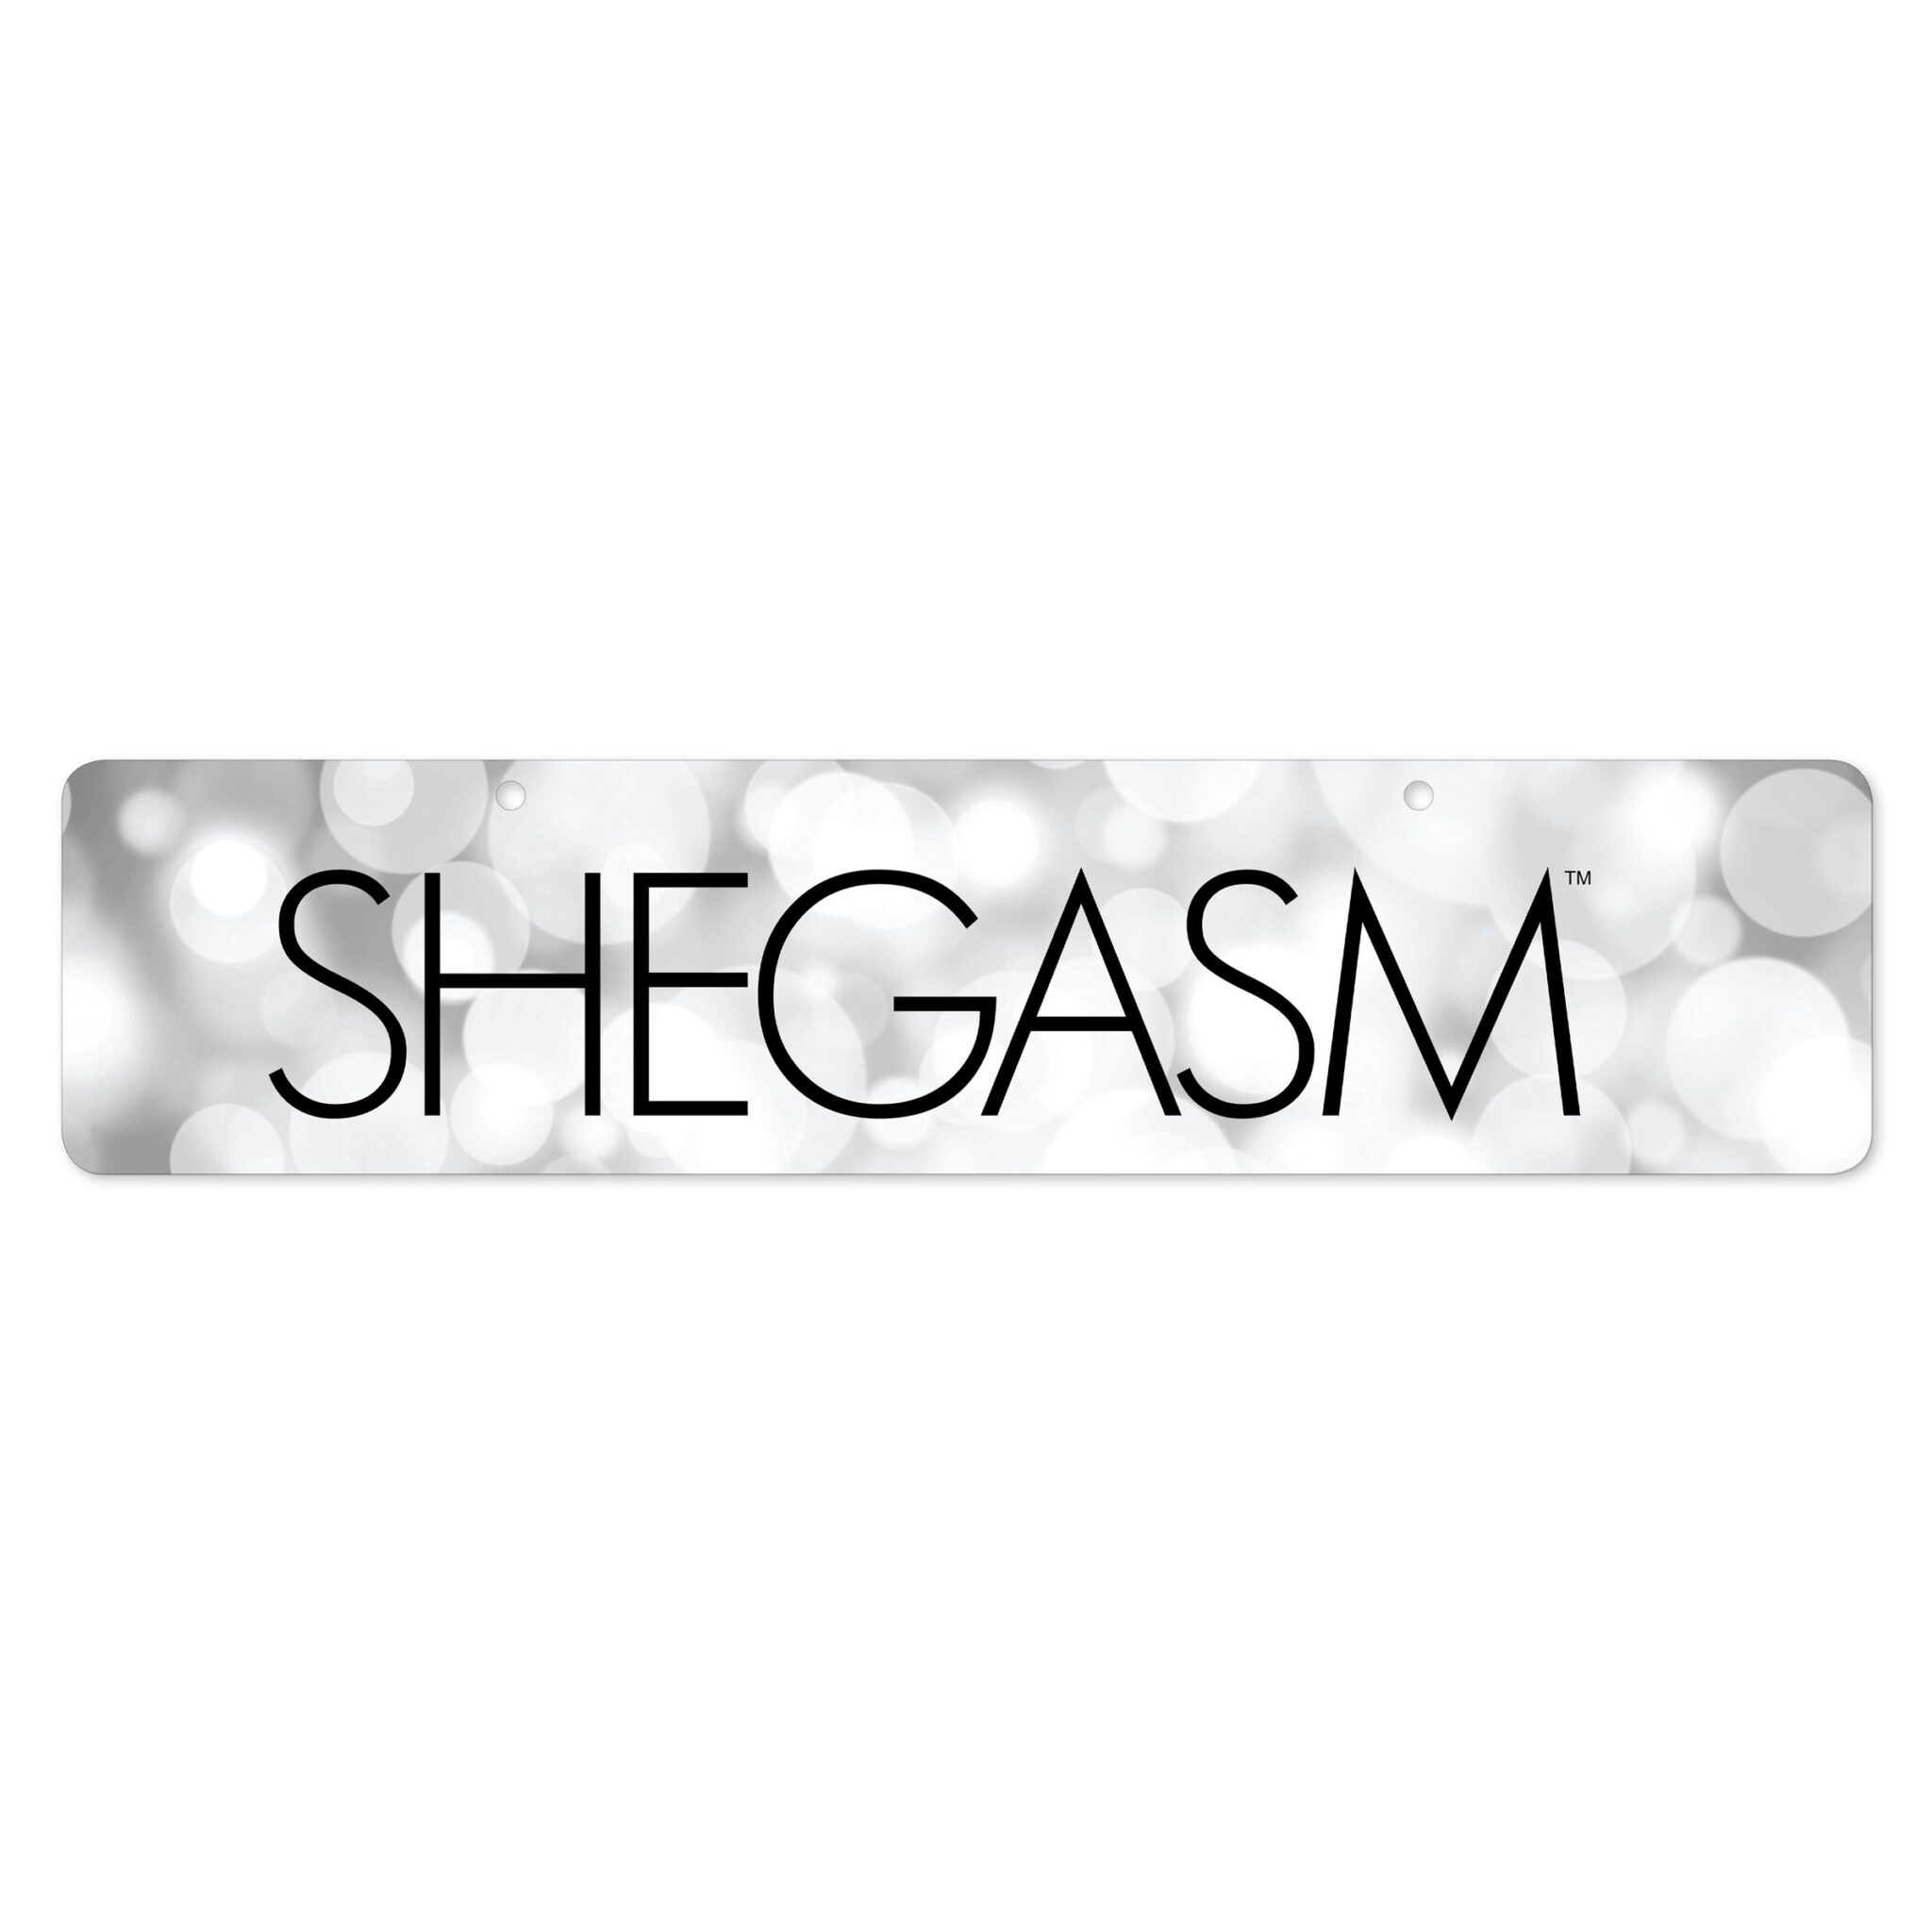 Shegasm Display Sign-2